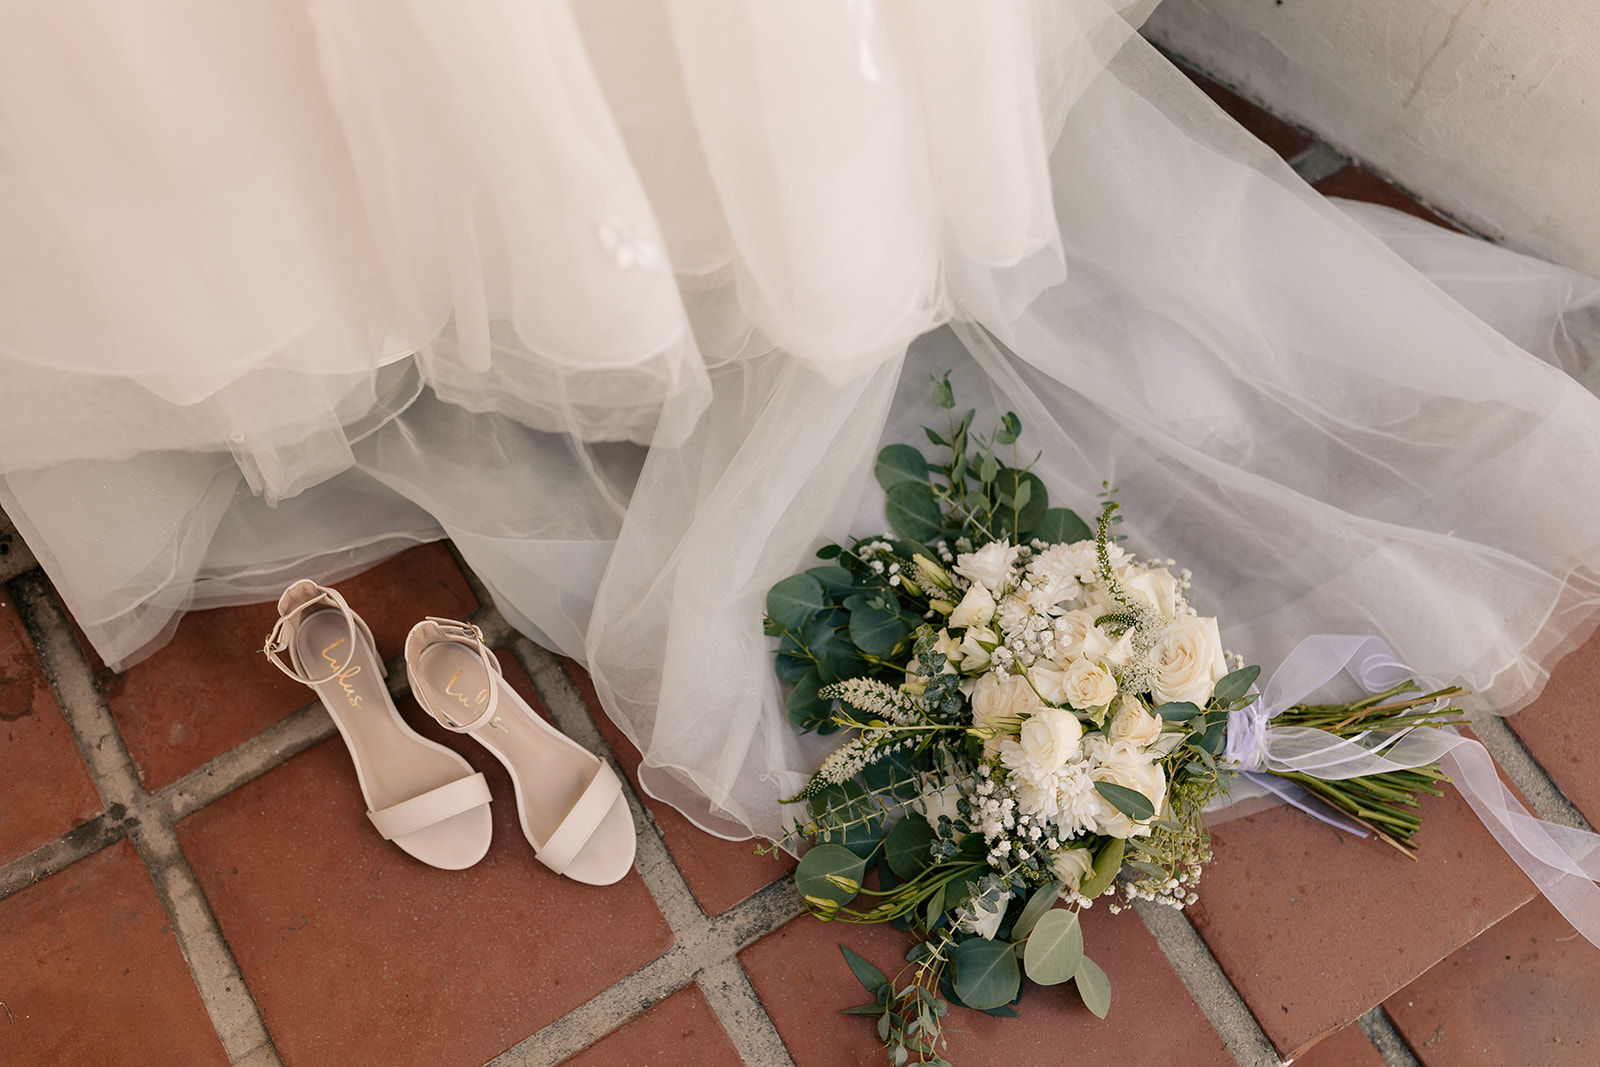 griffith house wedding anaheim california wedding accessories wedding rings wedding shoes heels wedding dress